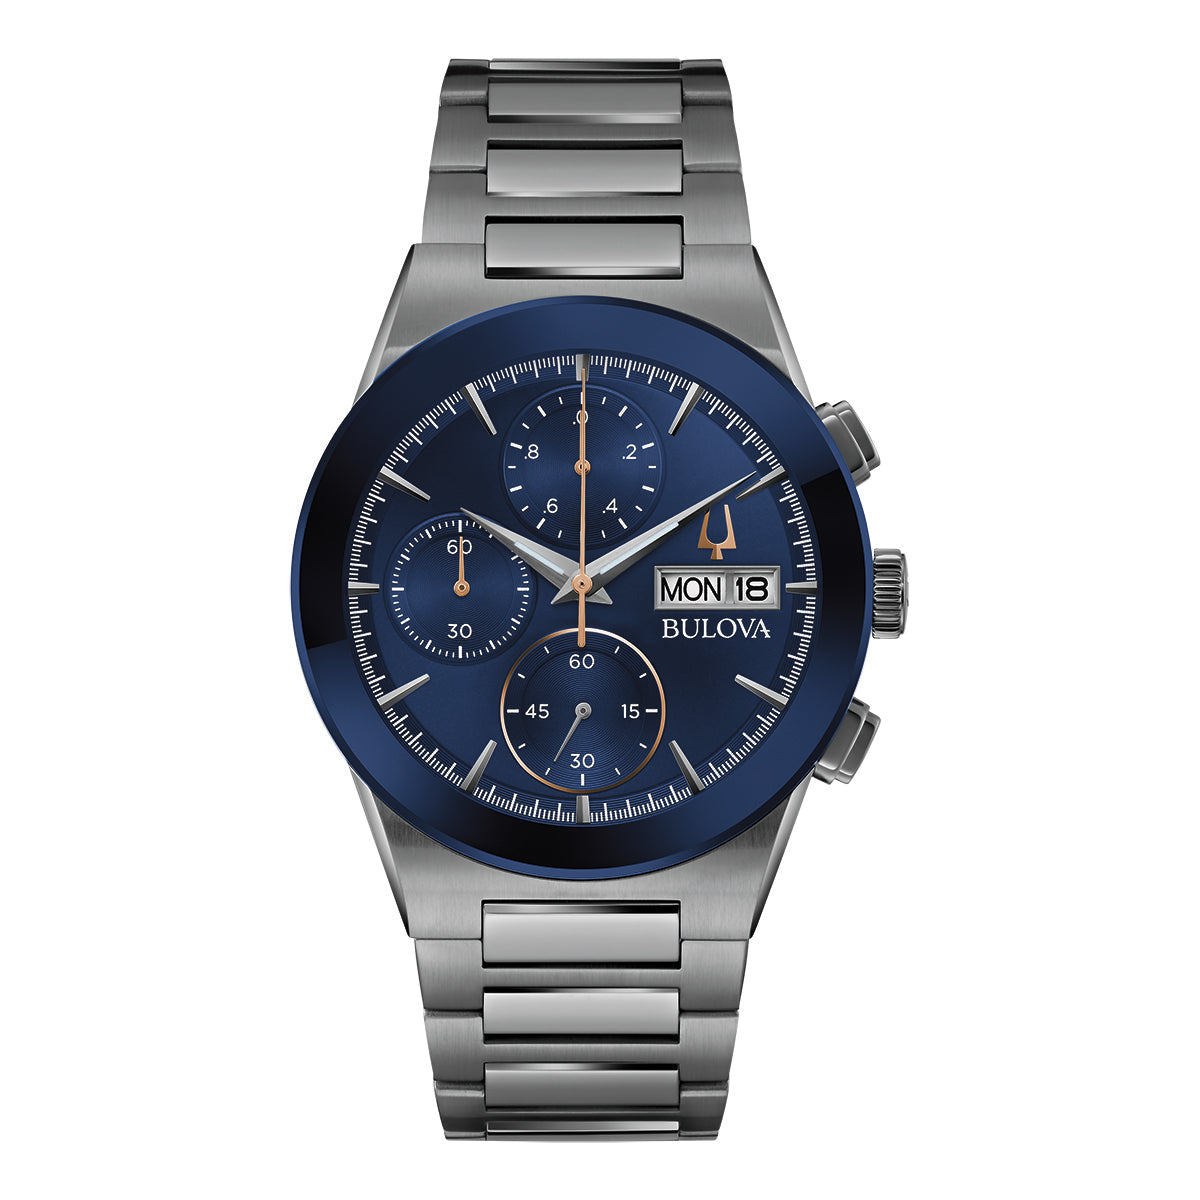 Bulova Men's Modern Watch 98C143